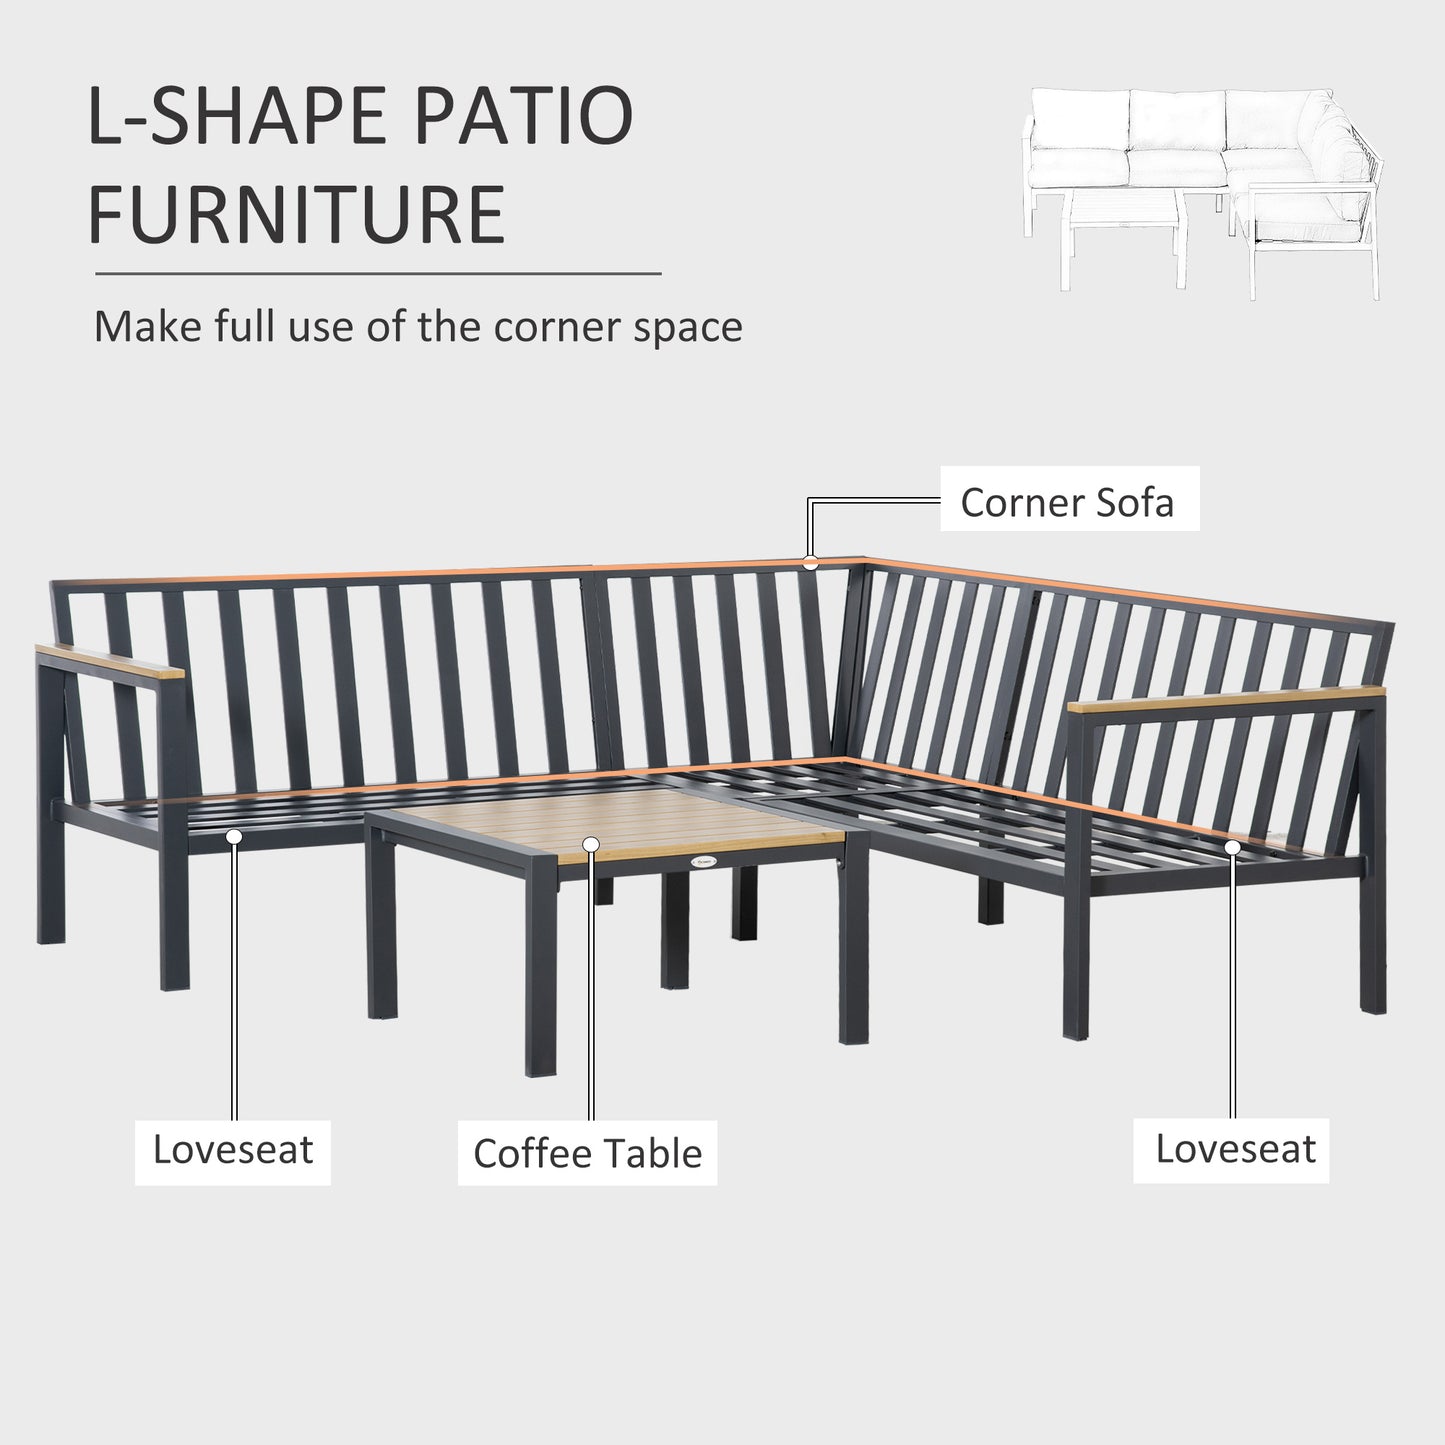 Outsunny 5 Seater L Shape Aluminium Garden Furniture Corner Sofa Set with Coffee Table, Outdoor Conversation Furniture Set w/ Cushions, Dark Grey